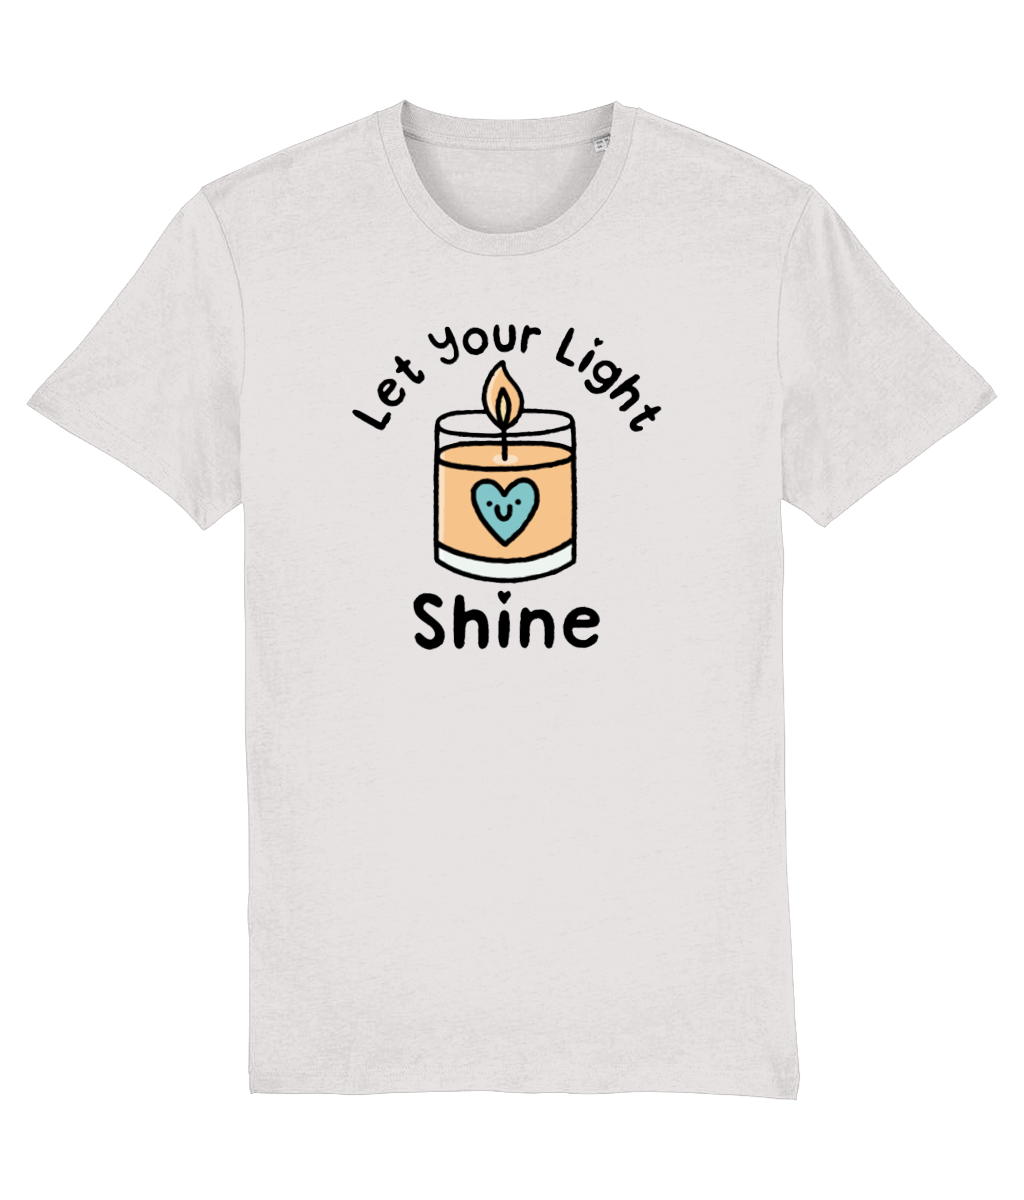 Pawsitivity T-Shirt - Let Your Light Shine (Multi Colours Available)